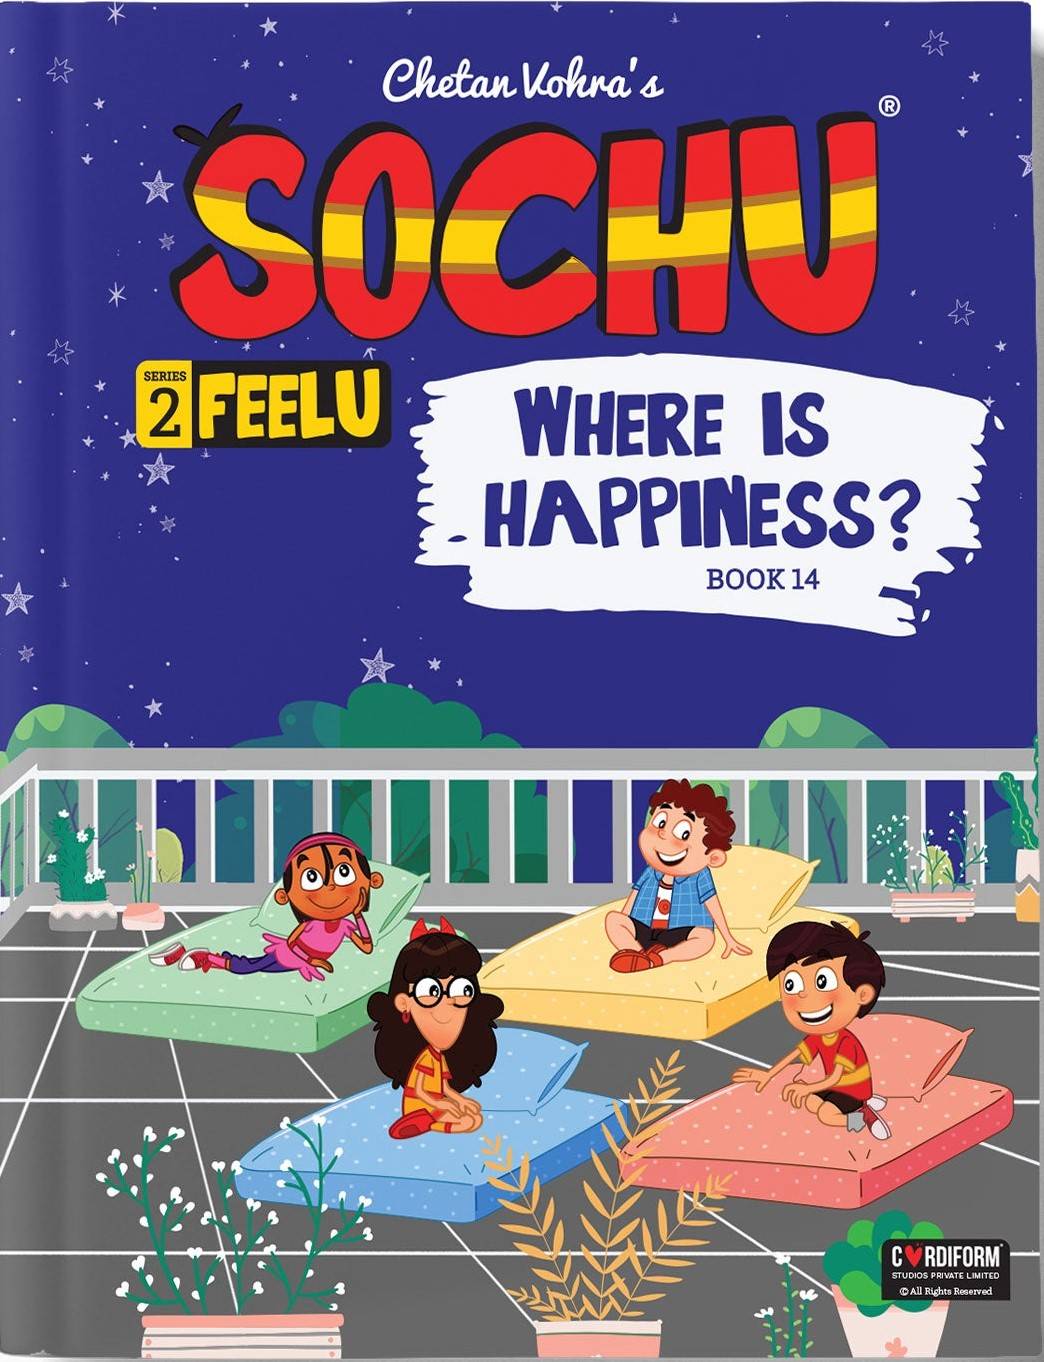 IMG : Sochu Series 2 Feelu Where is Happiness #14